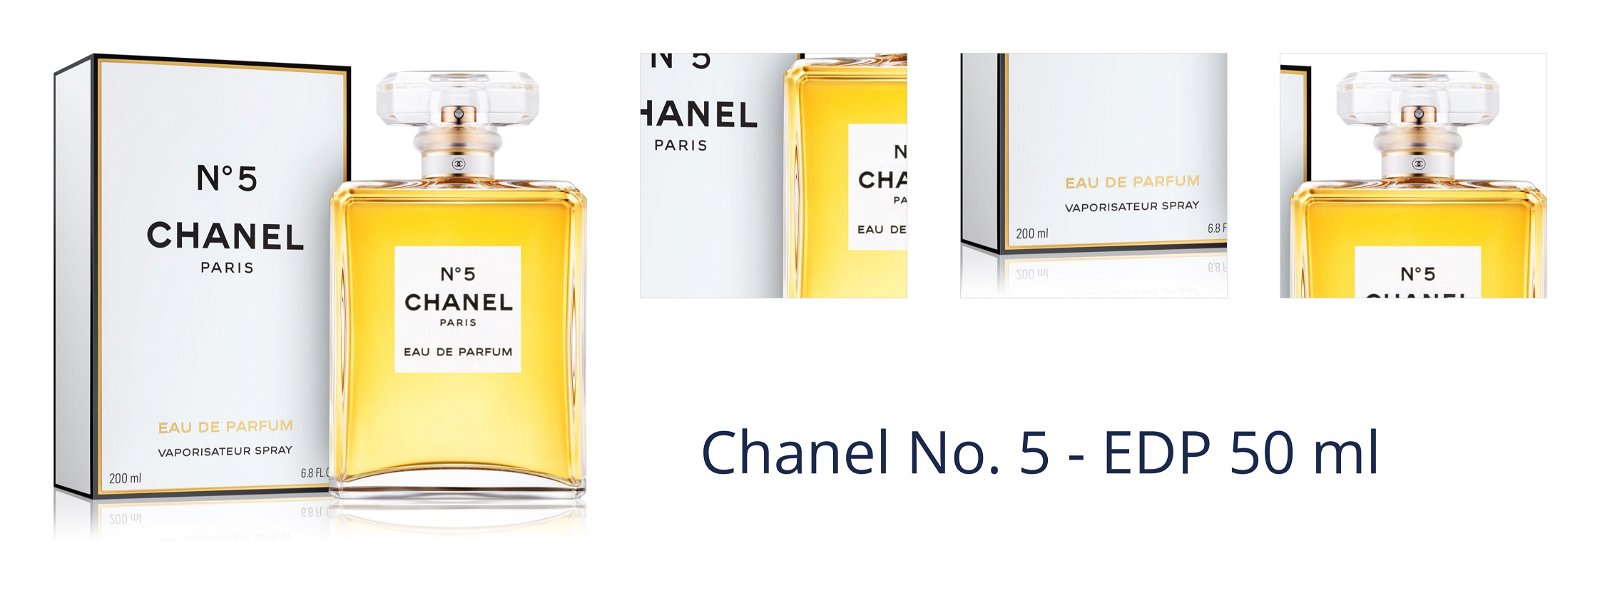 Chanel No. 5 - EDP 50 ml 1